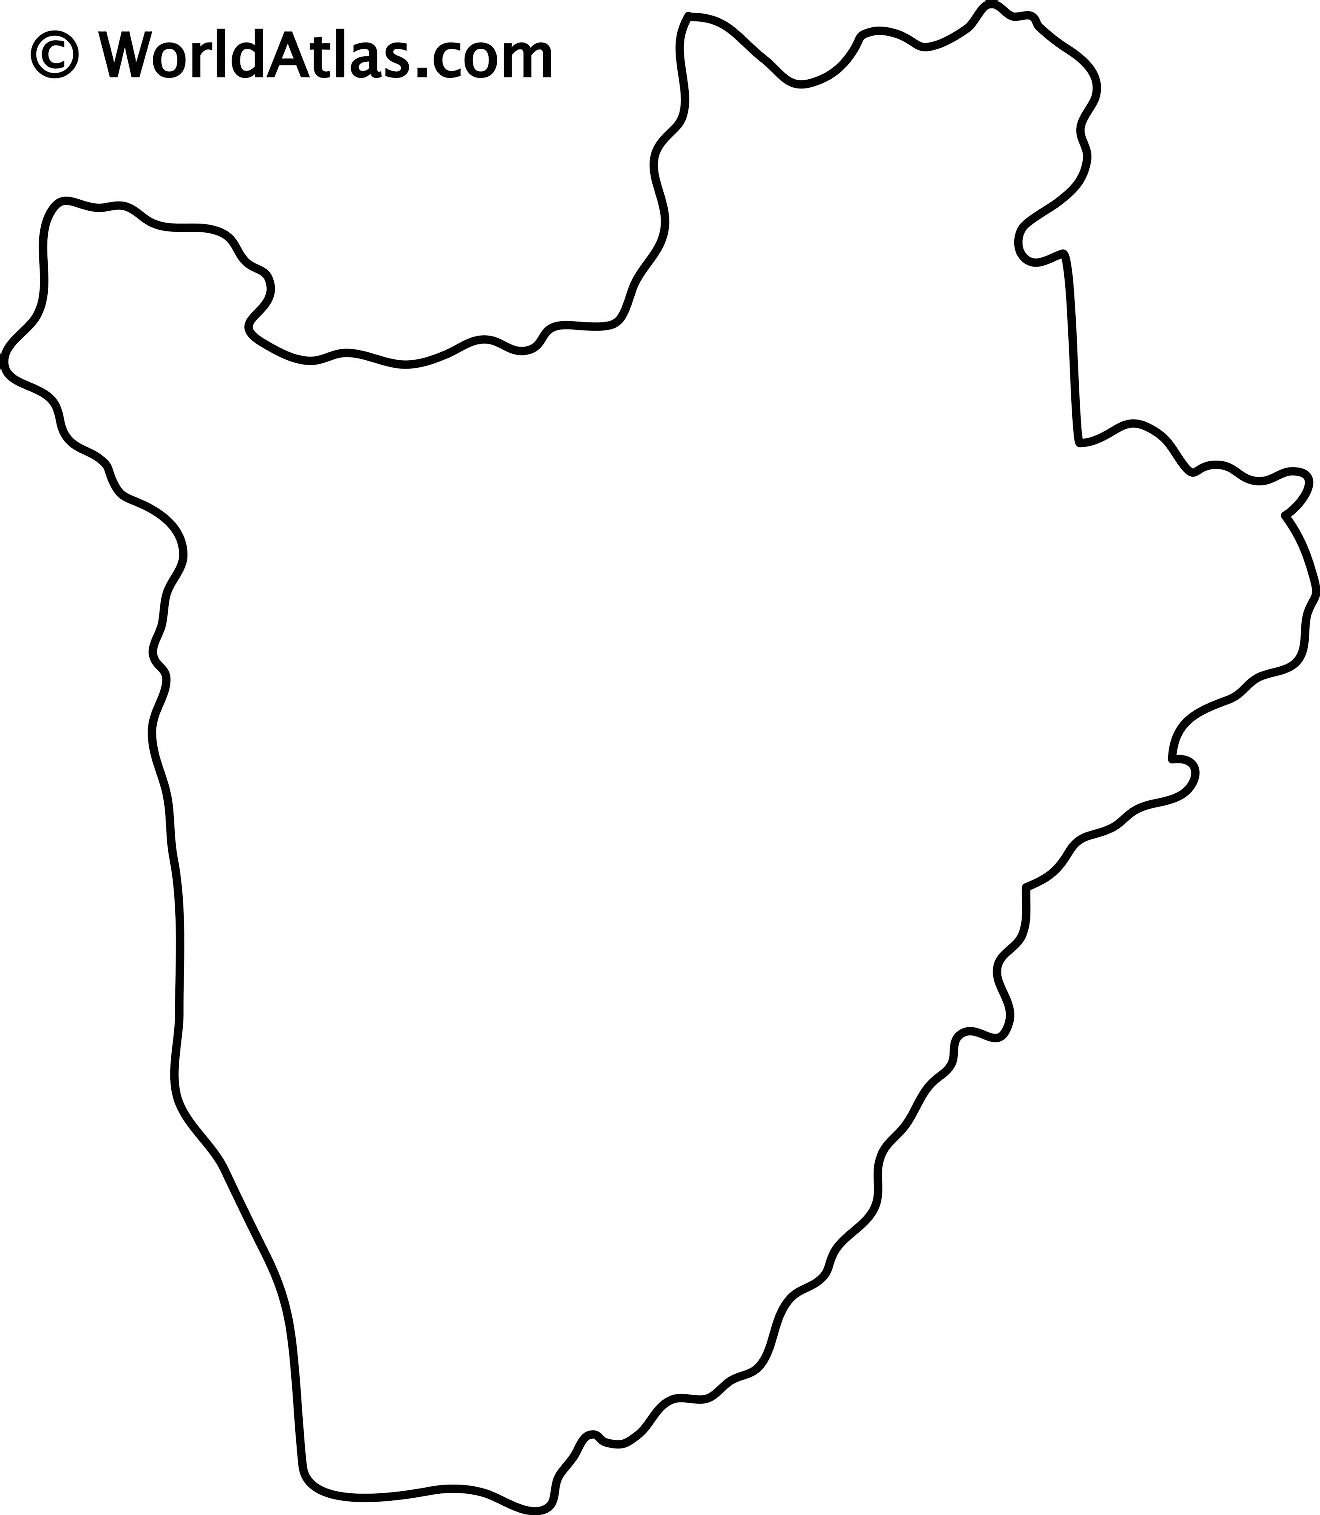 Blank outline map of Burundi